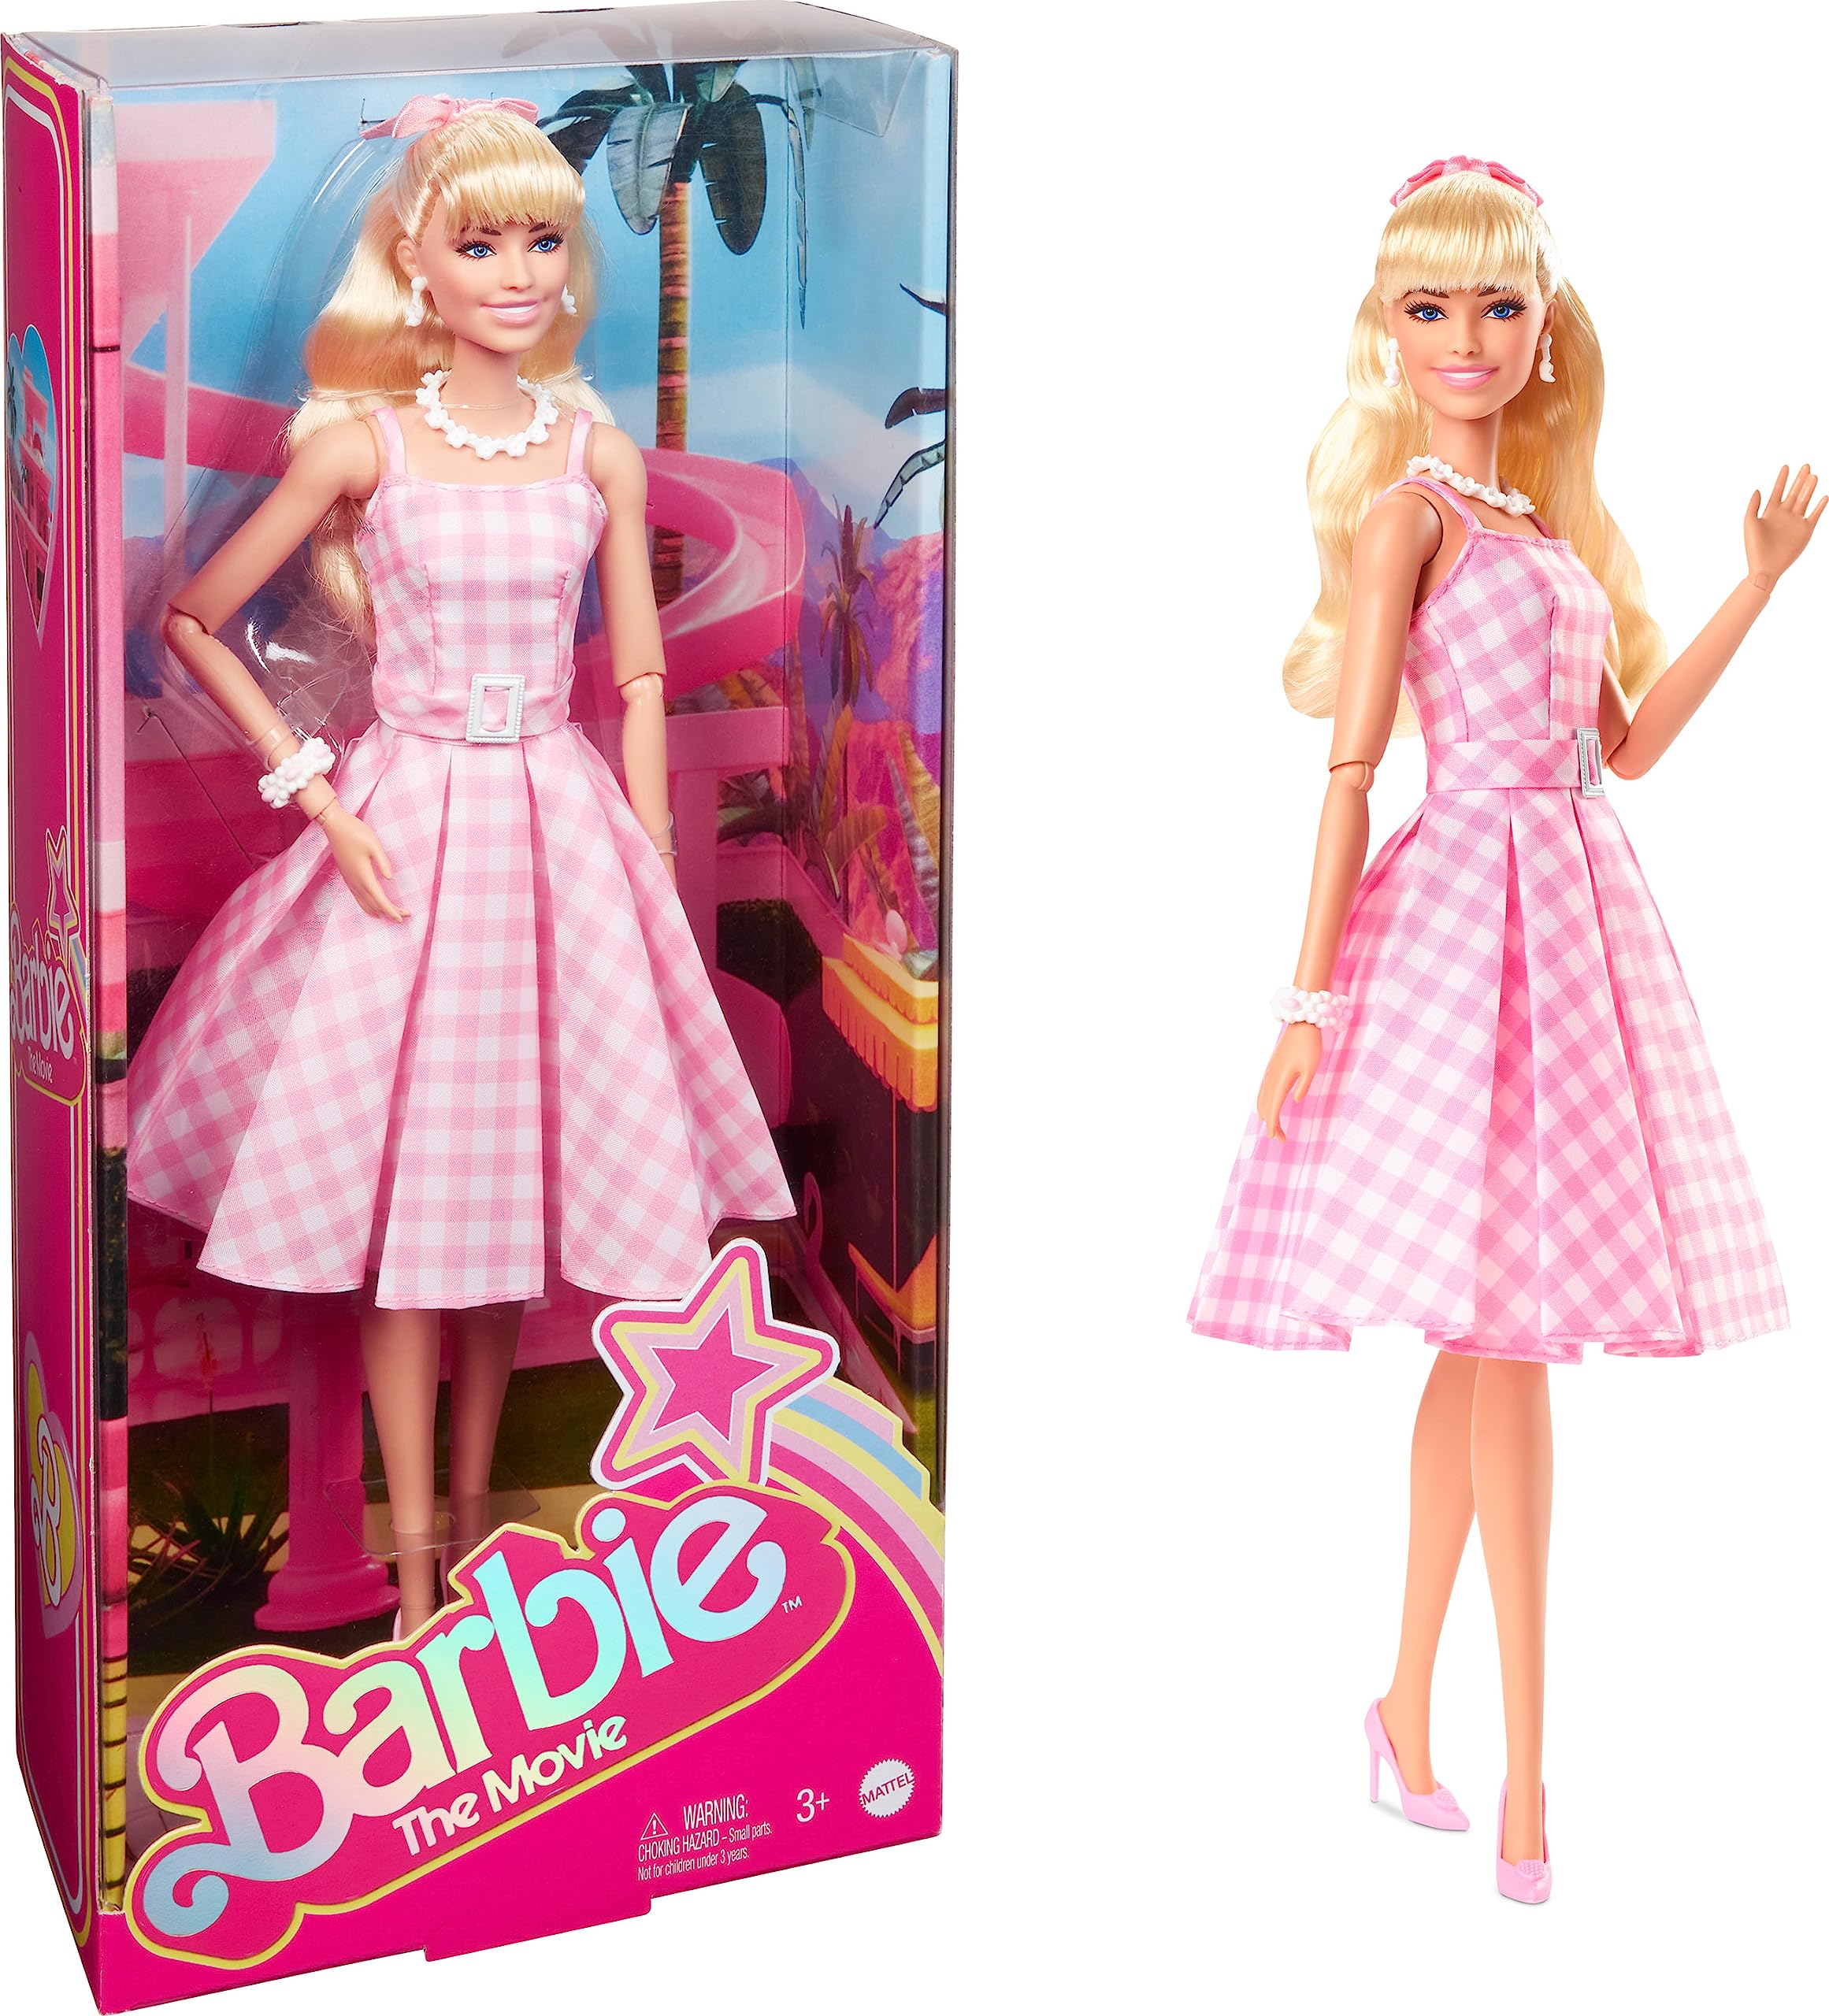 $19.99: Barbie The Movie Doll, Margot Robbie as Barbie